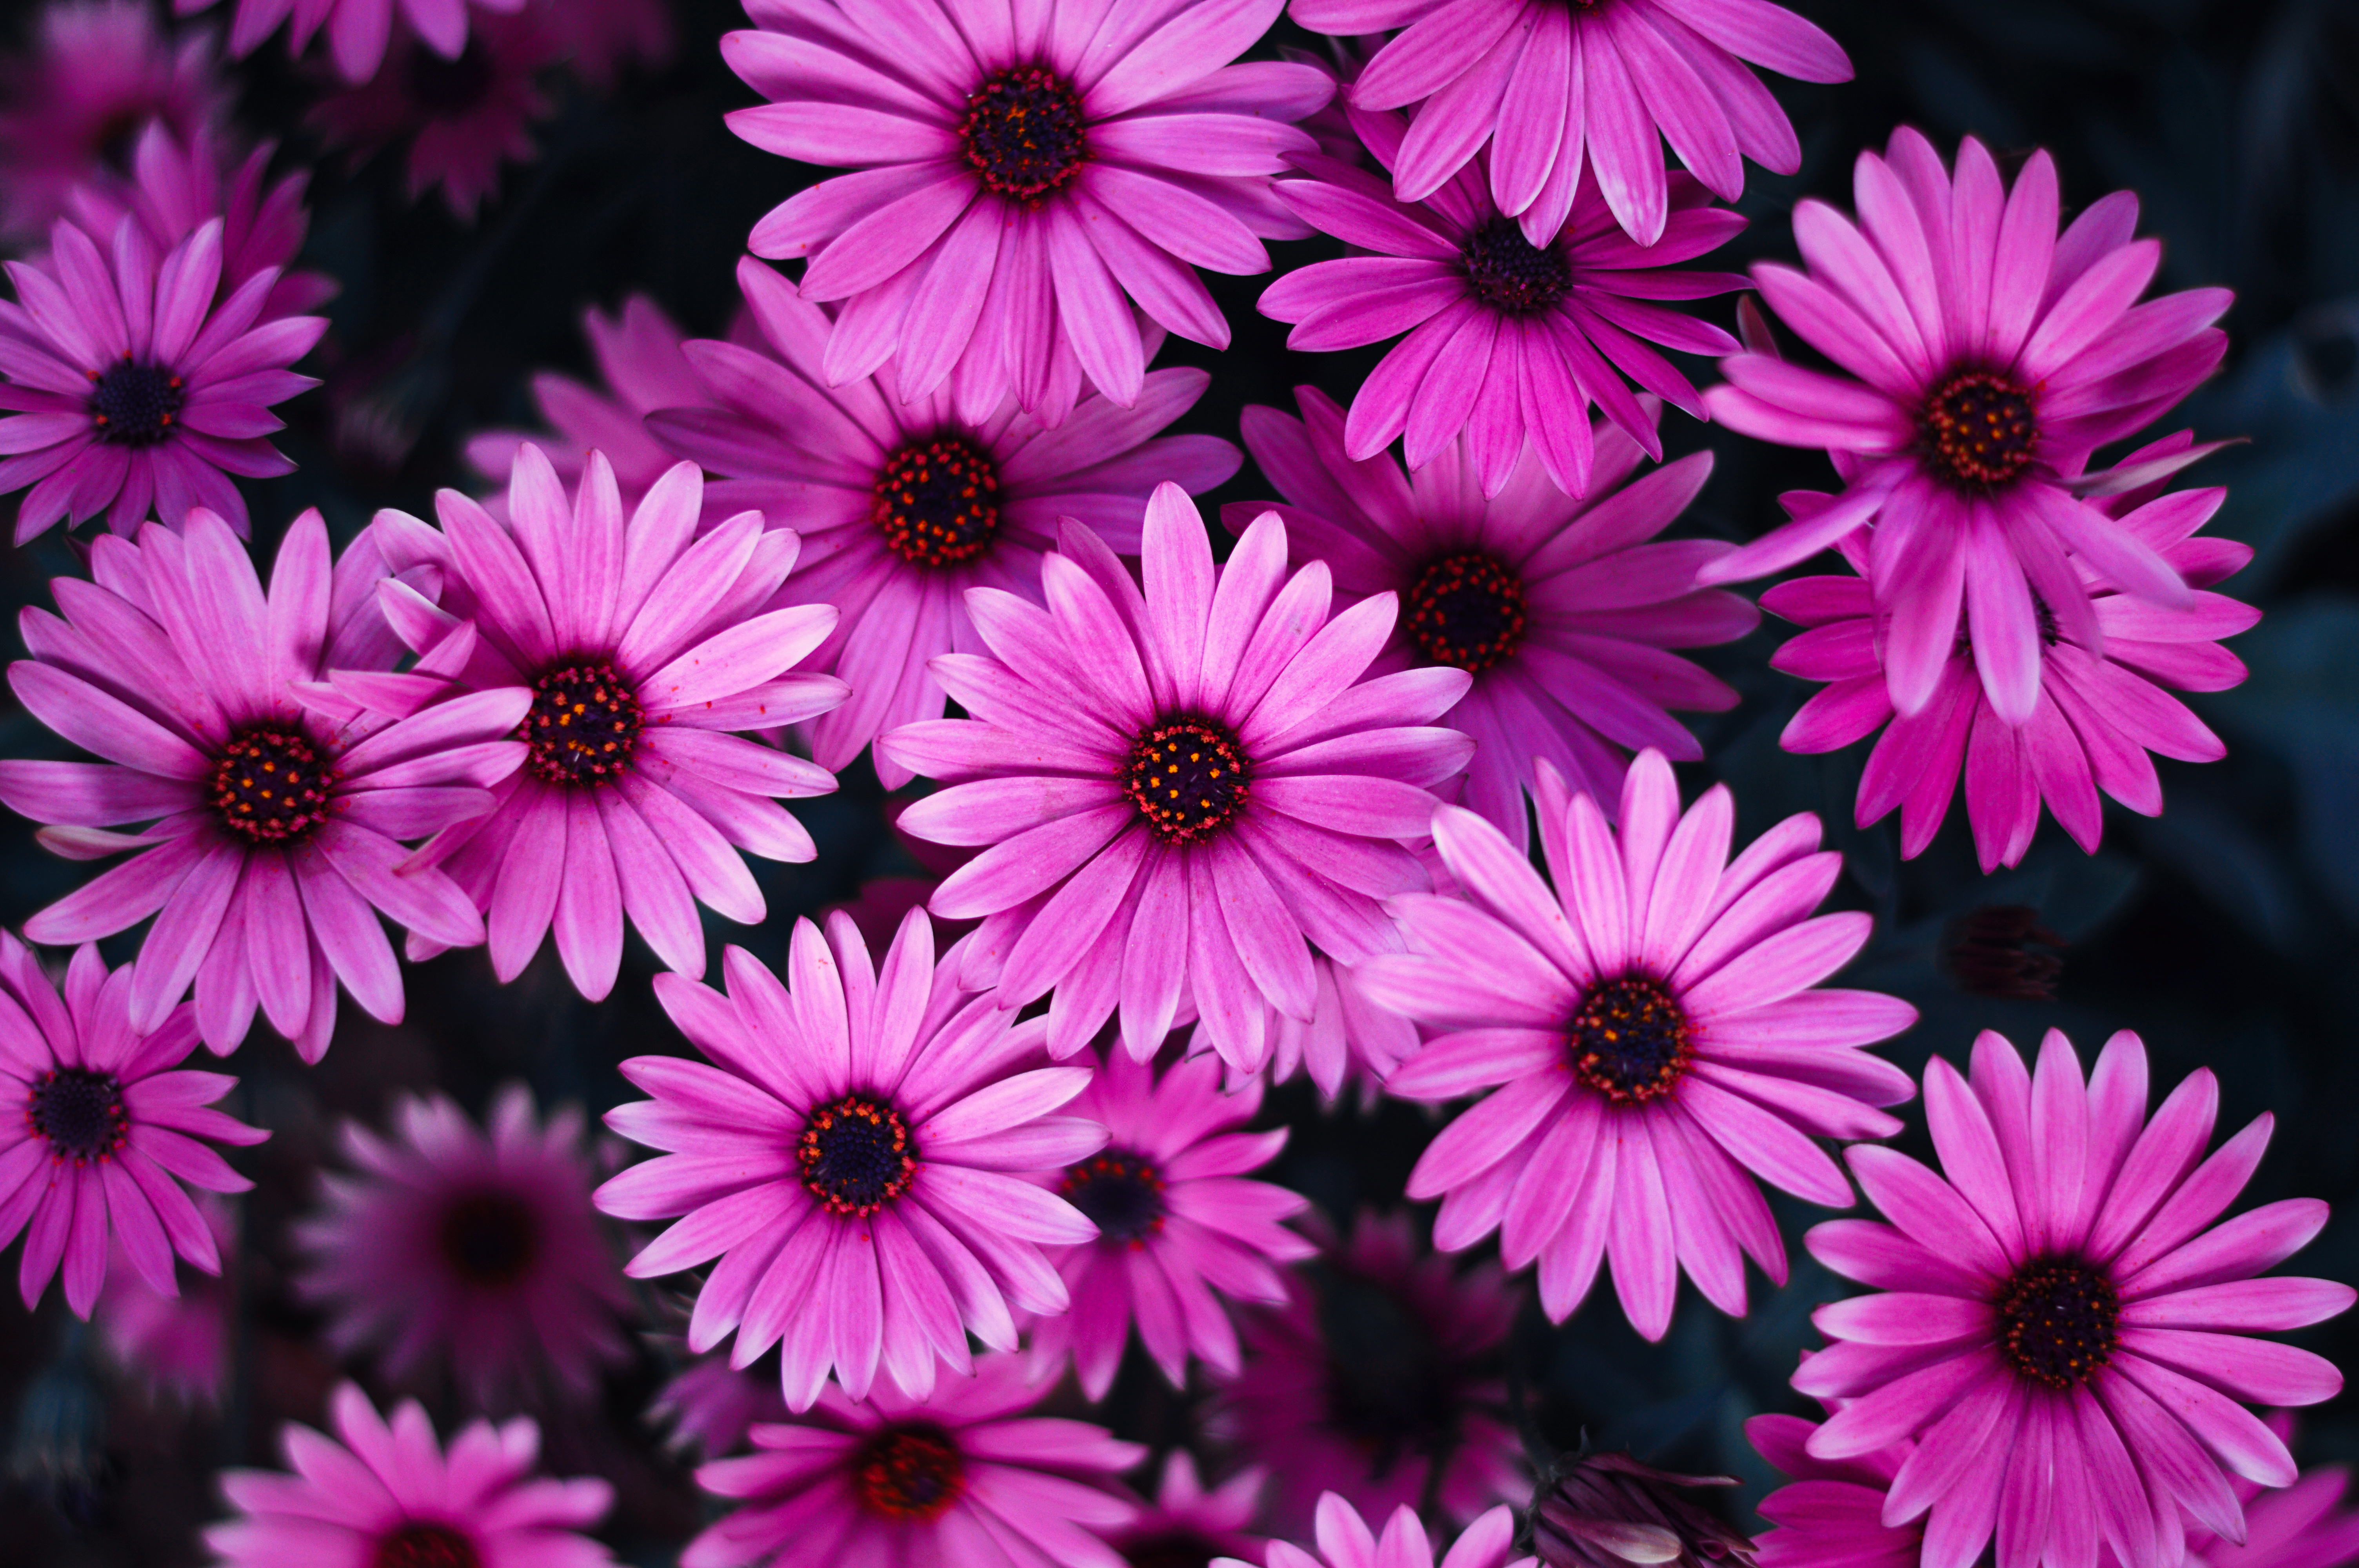 Fresh Pink Daisy  Flowers  Nature Background Wallpapers on Desktop Nexus  Image 1227129